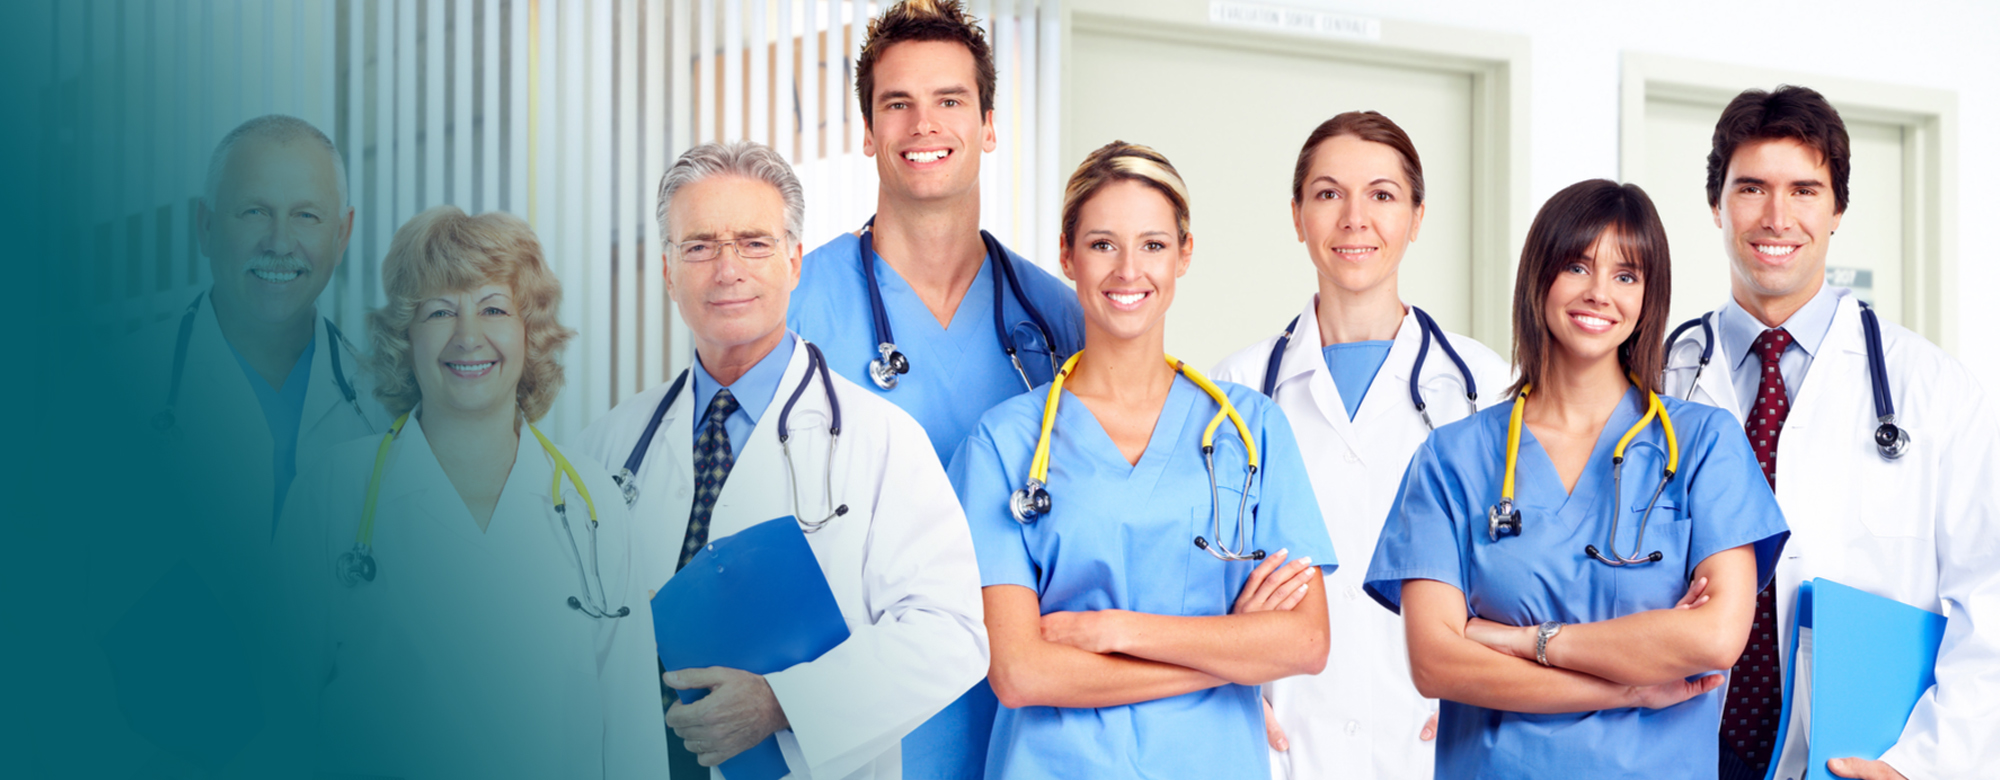 Medical Malpractice Insurance Vermont